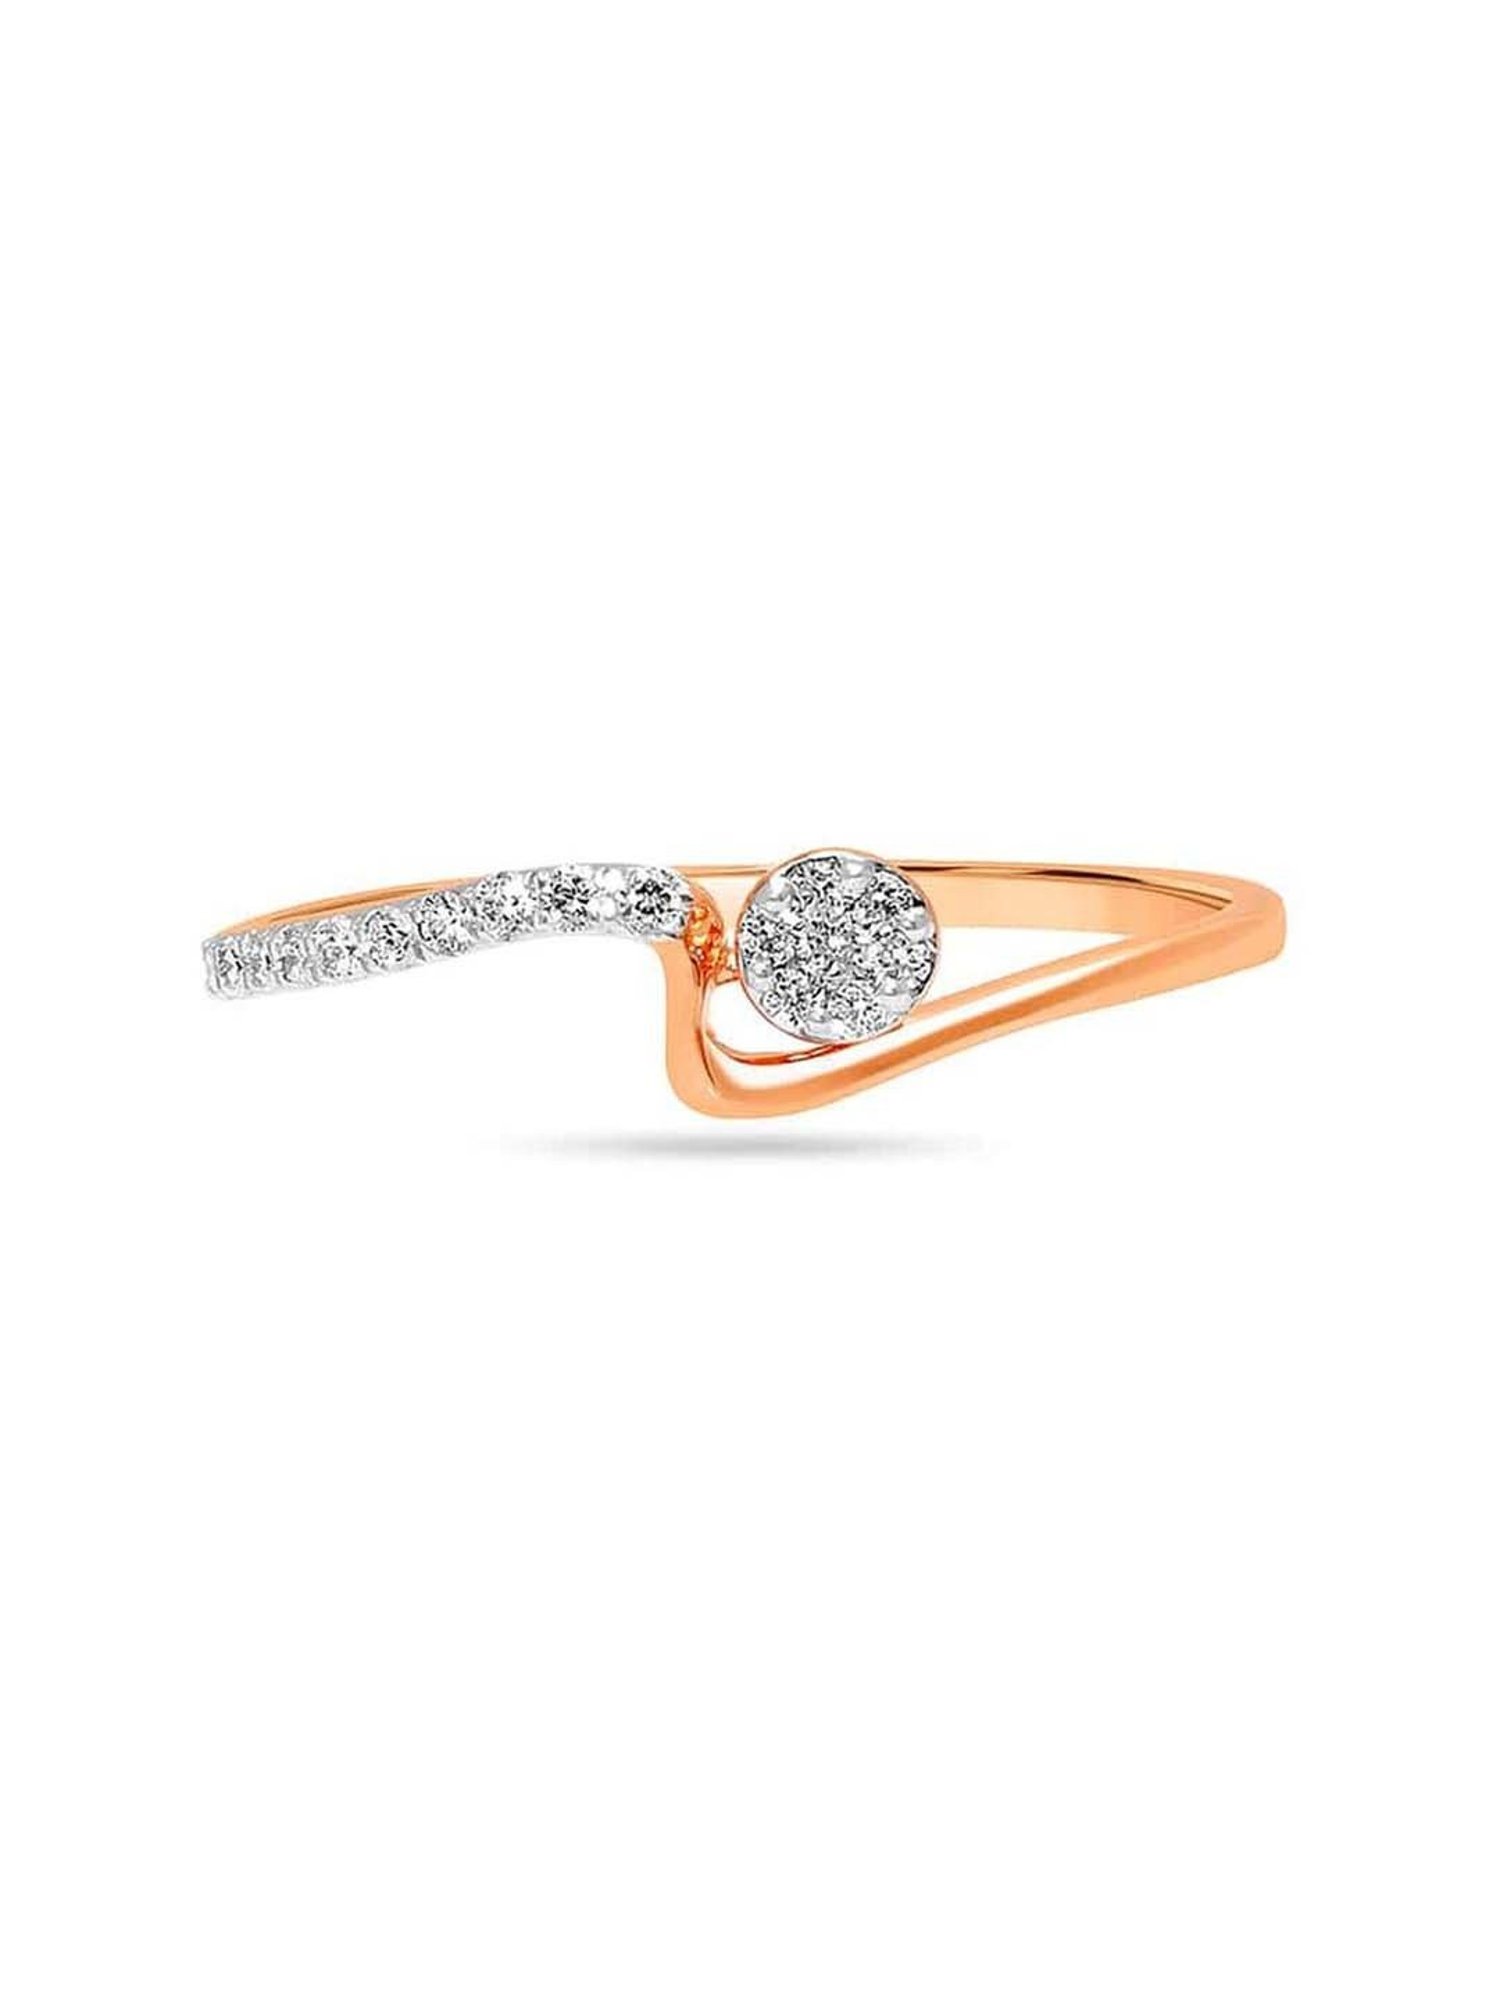 Classy Leafy Diamond Ring